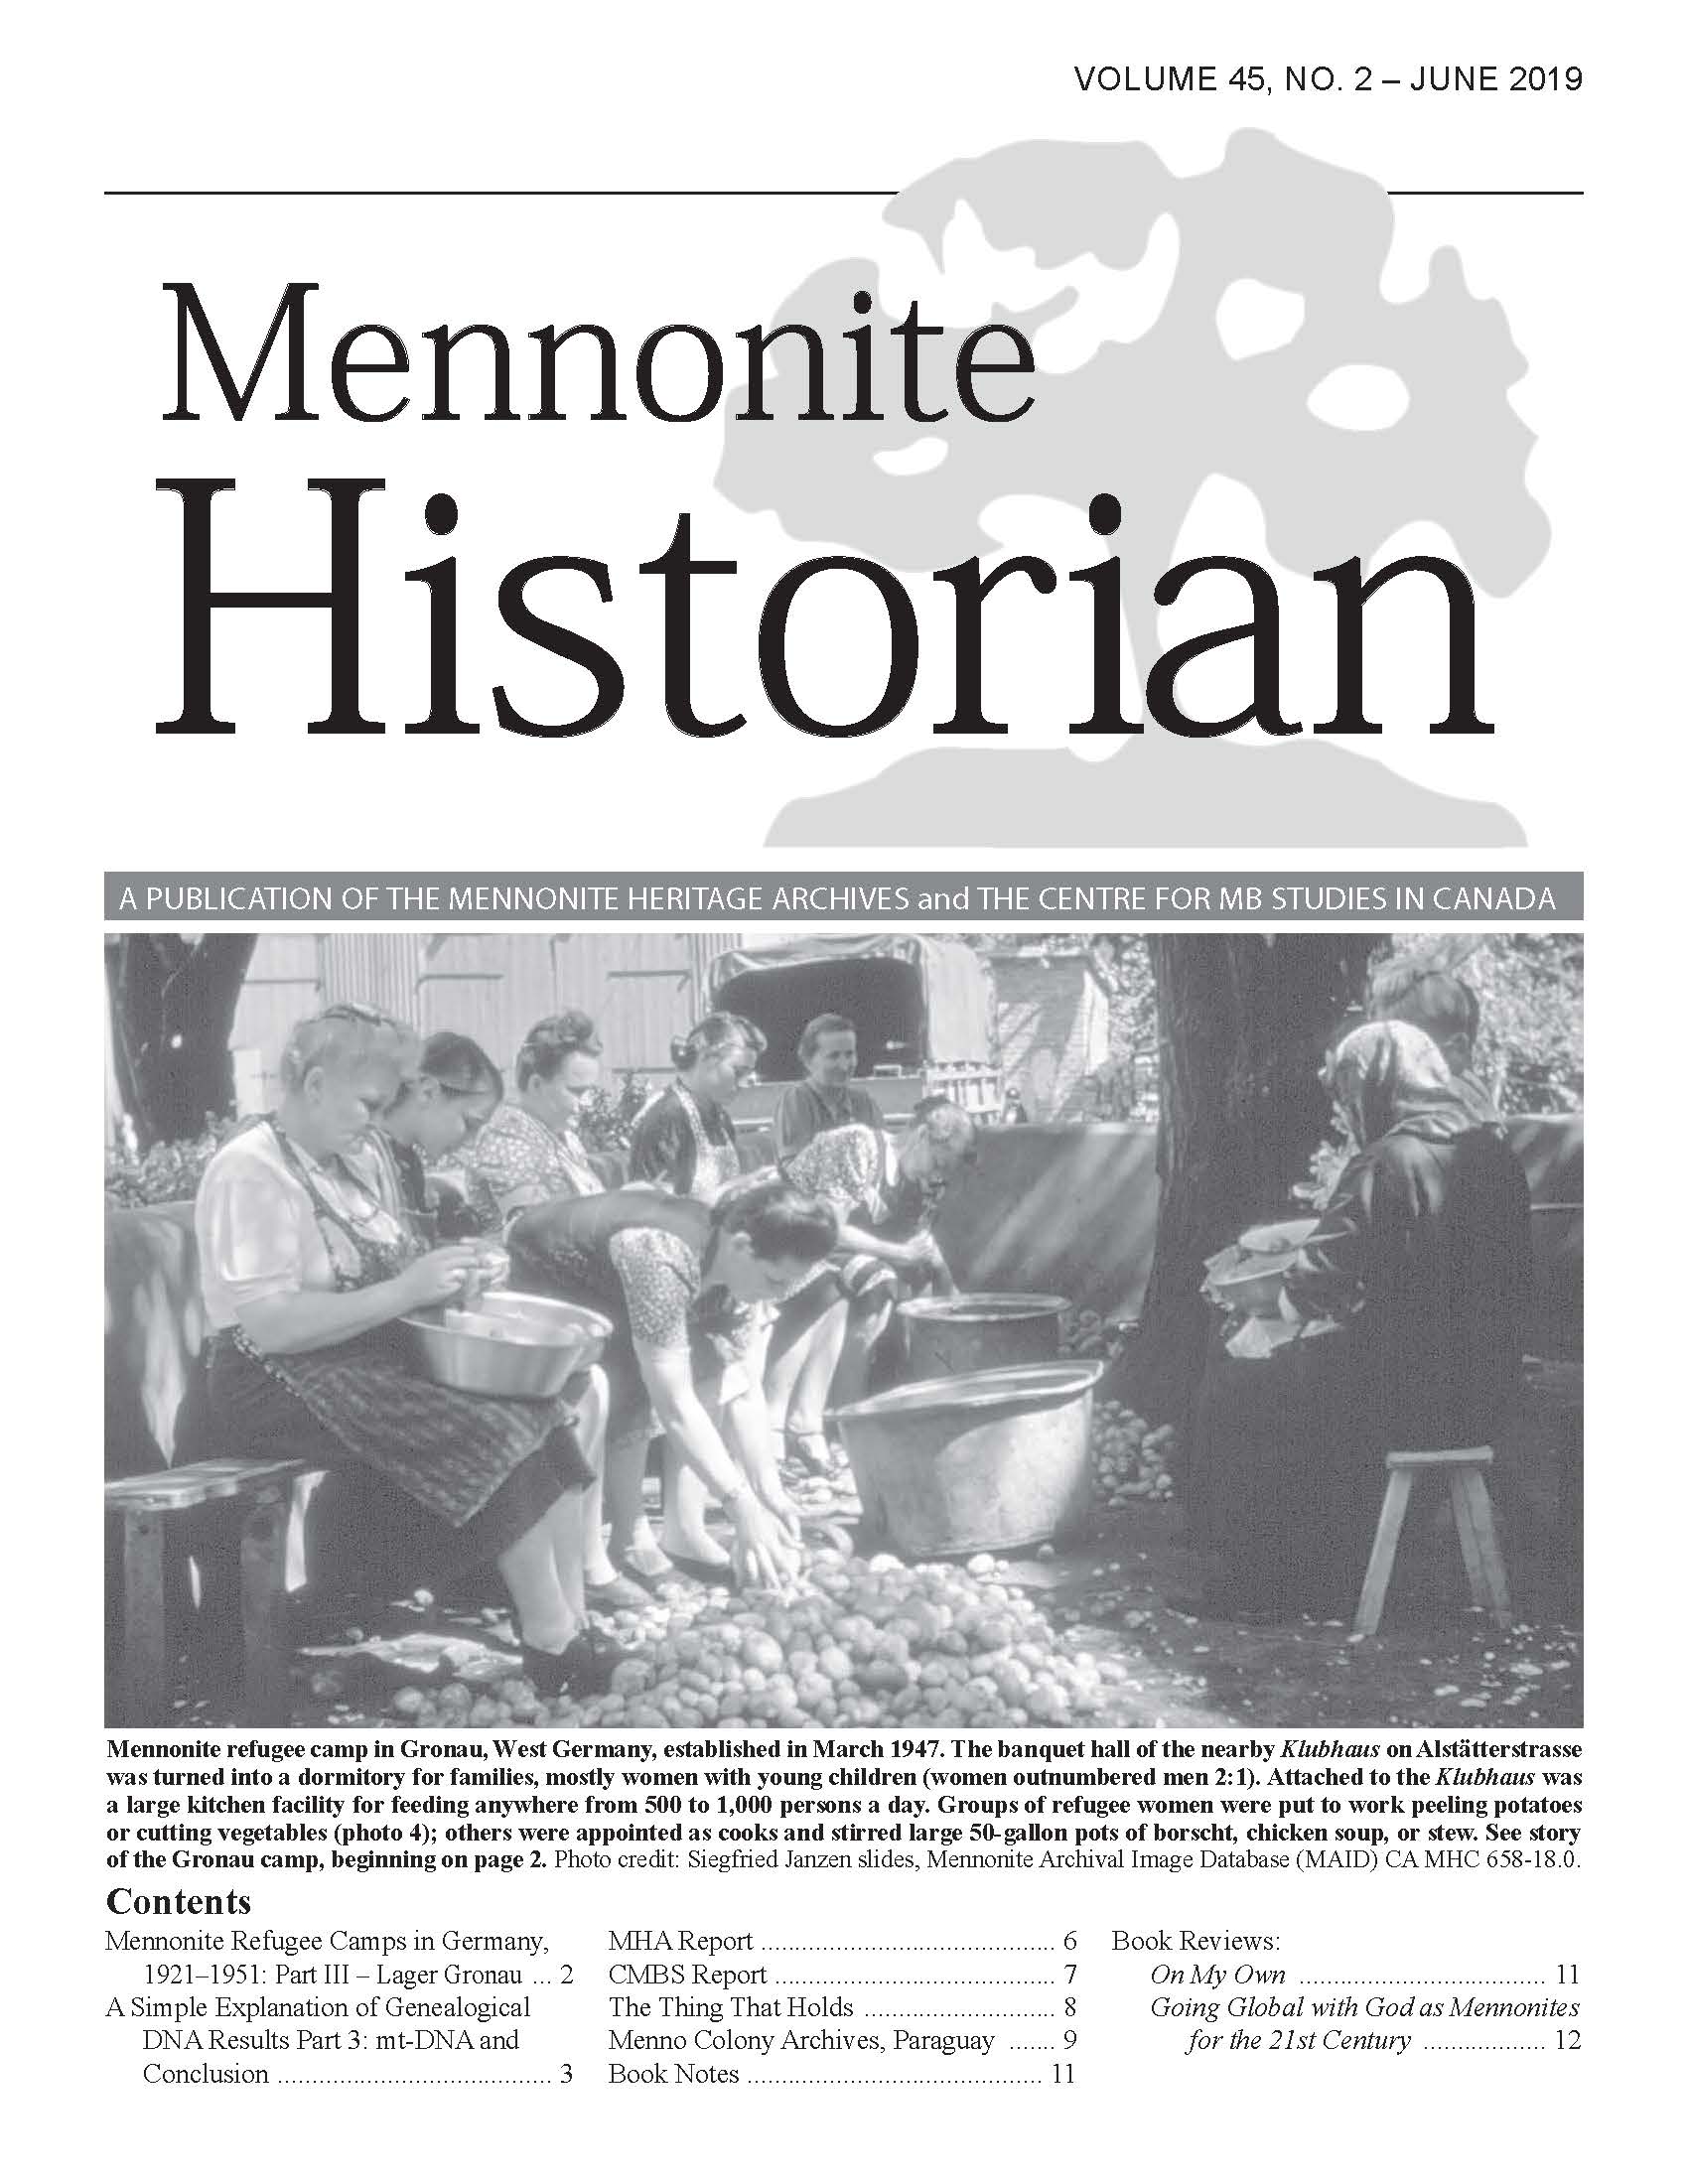 Mennonite Historian (June 2019)